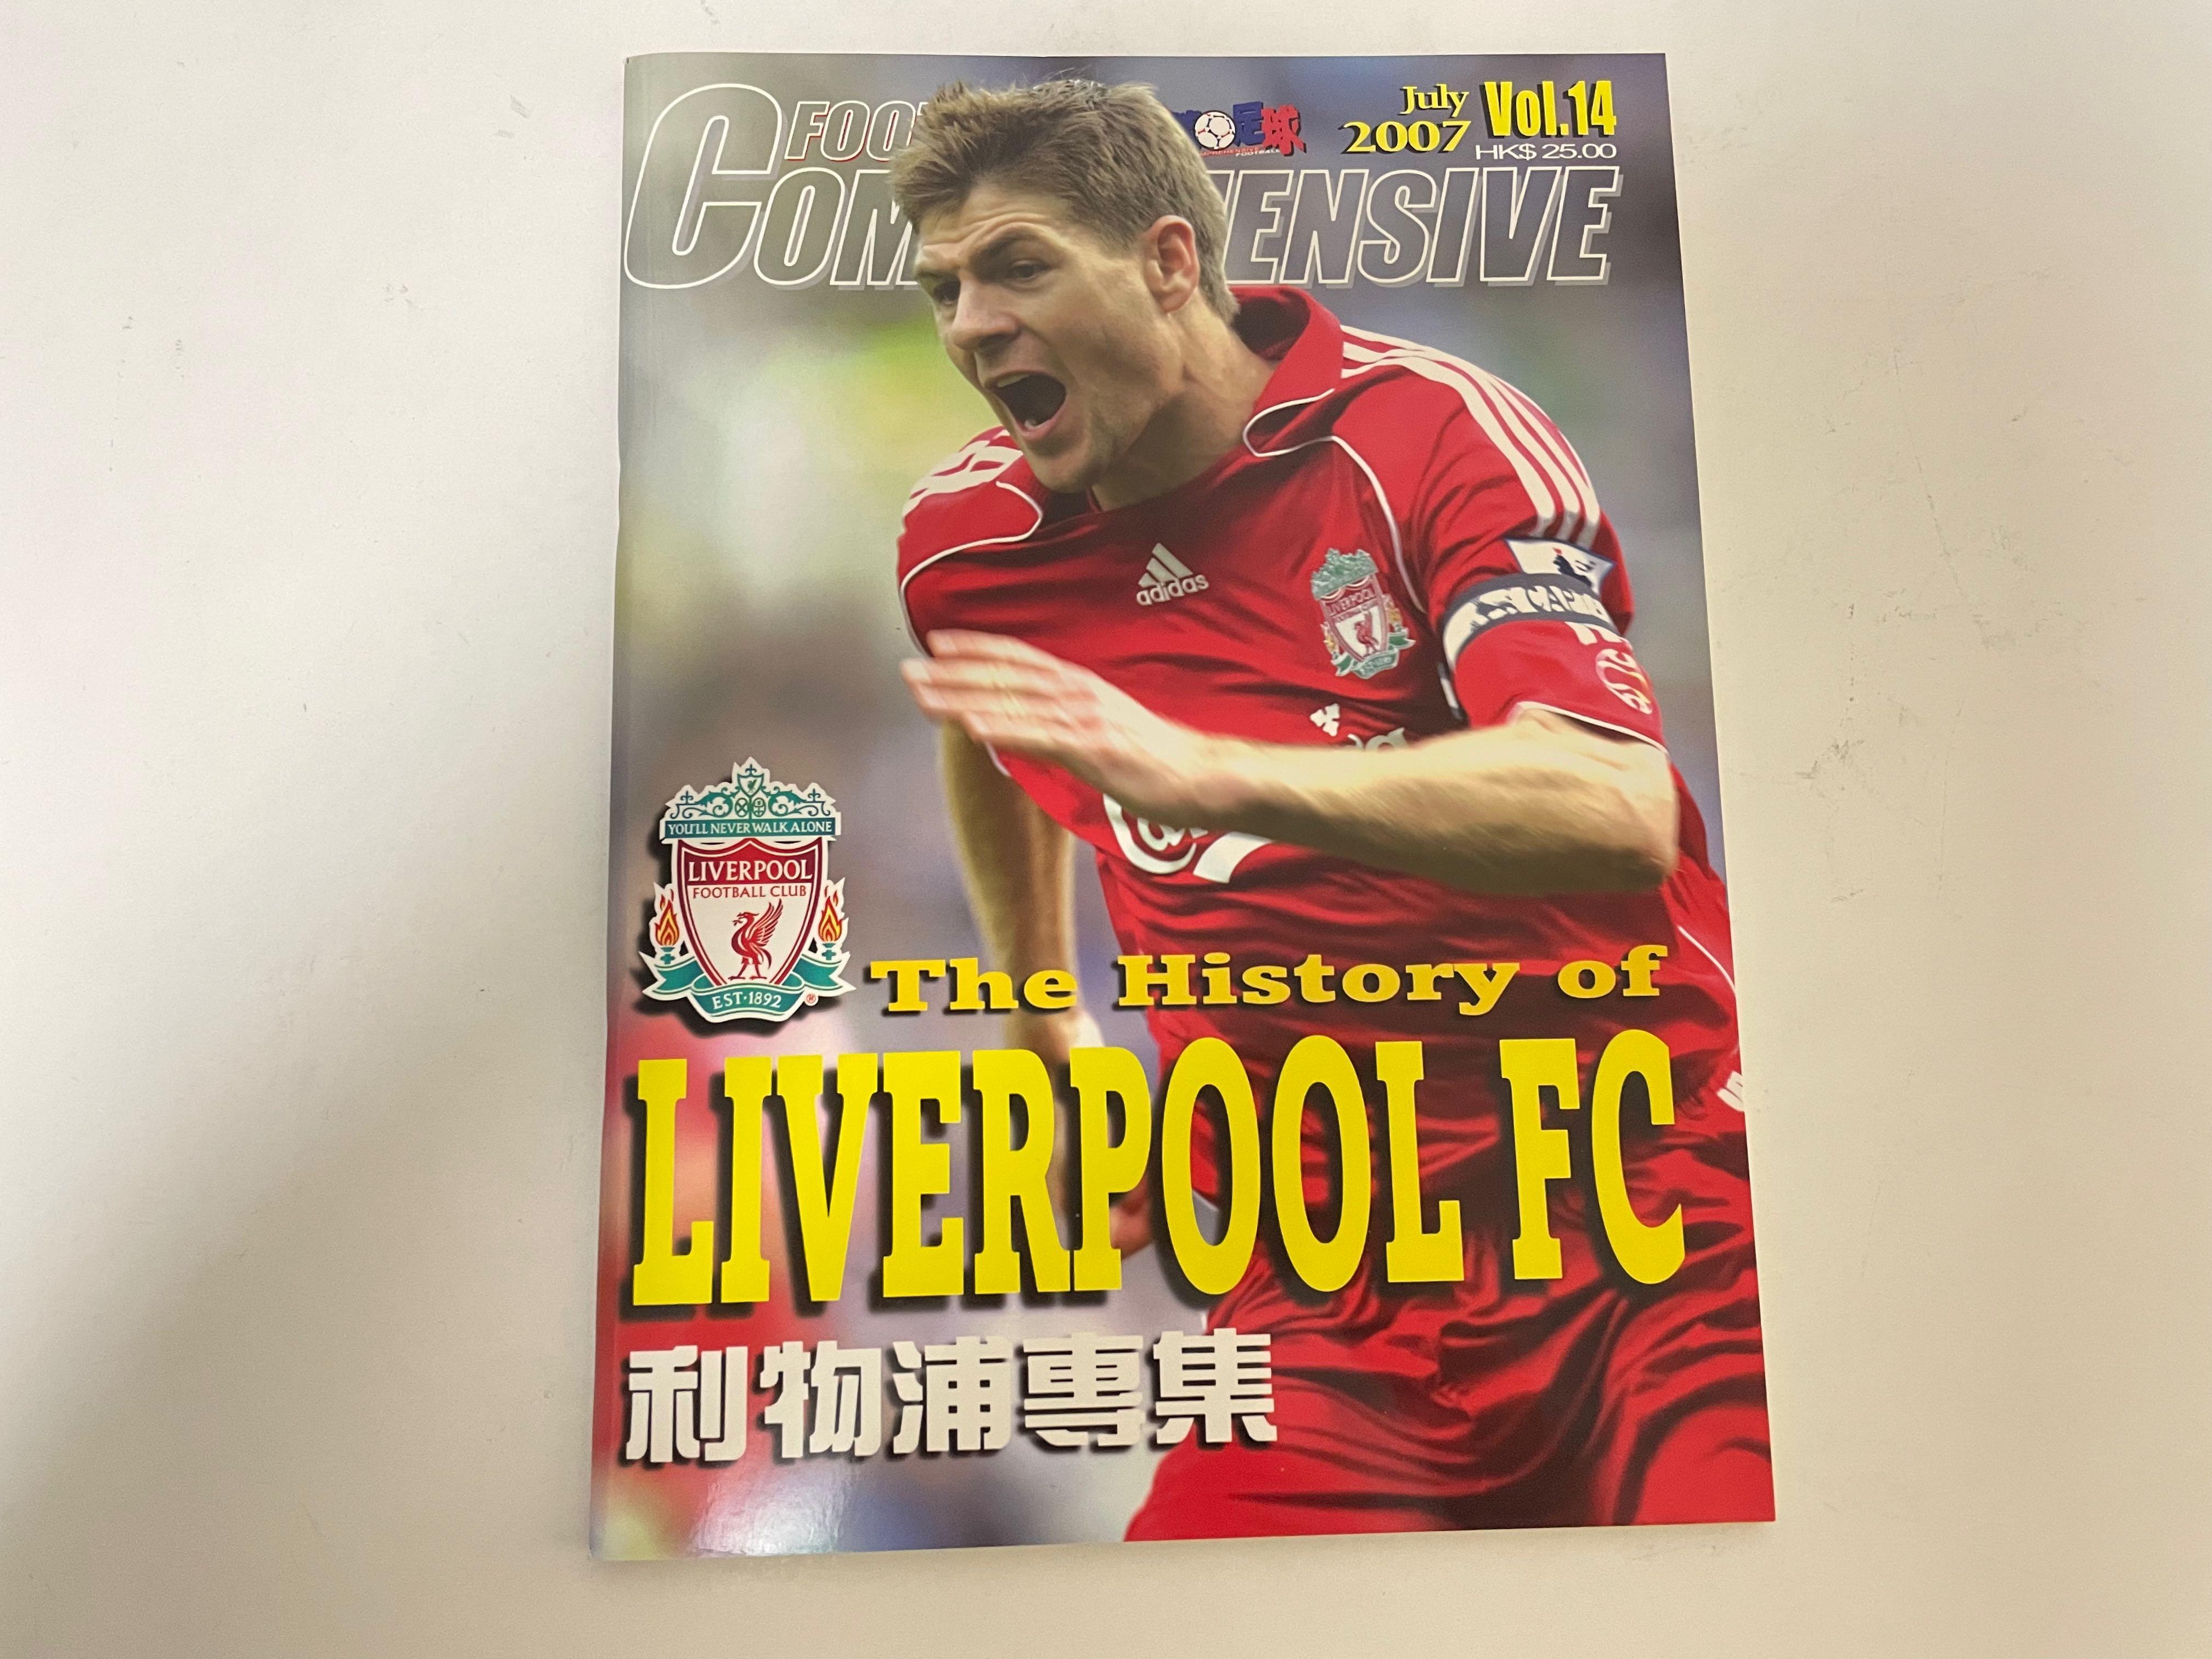 The History of Liverpool FC 利物浦專集, 謝拉特封面Steven Gerrard